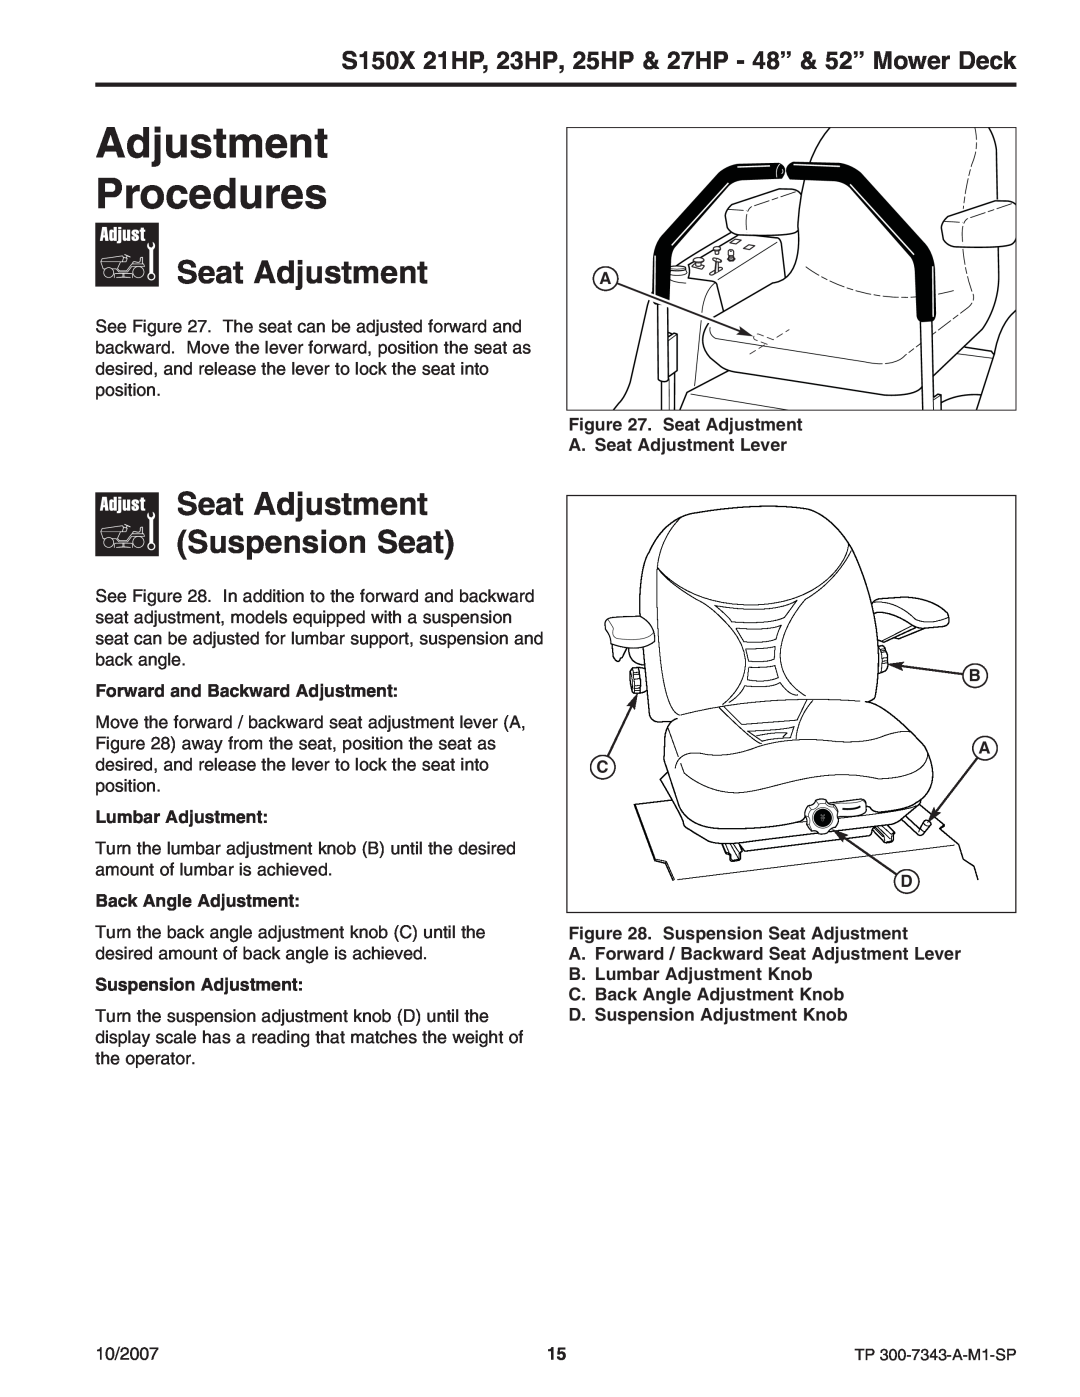 Snapper S150X manual Seat Adjustment Suspension Seat, Adjustment Procedures 